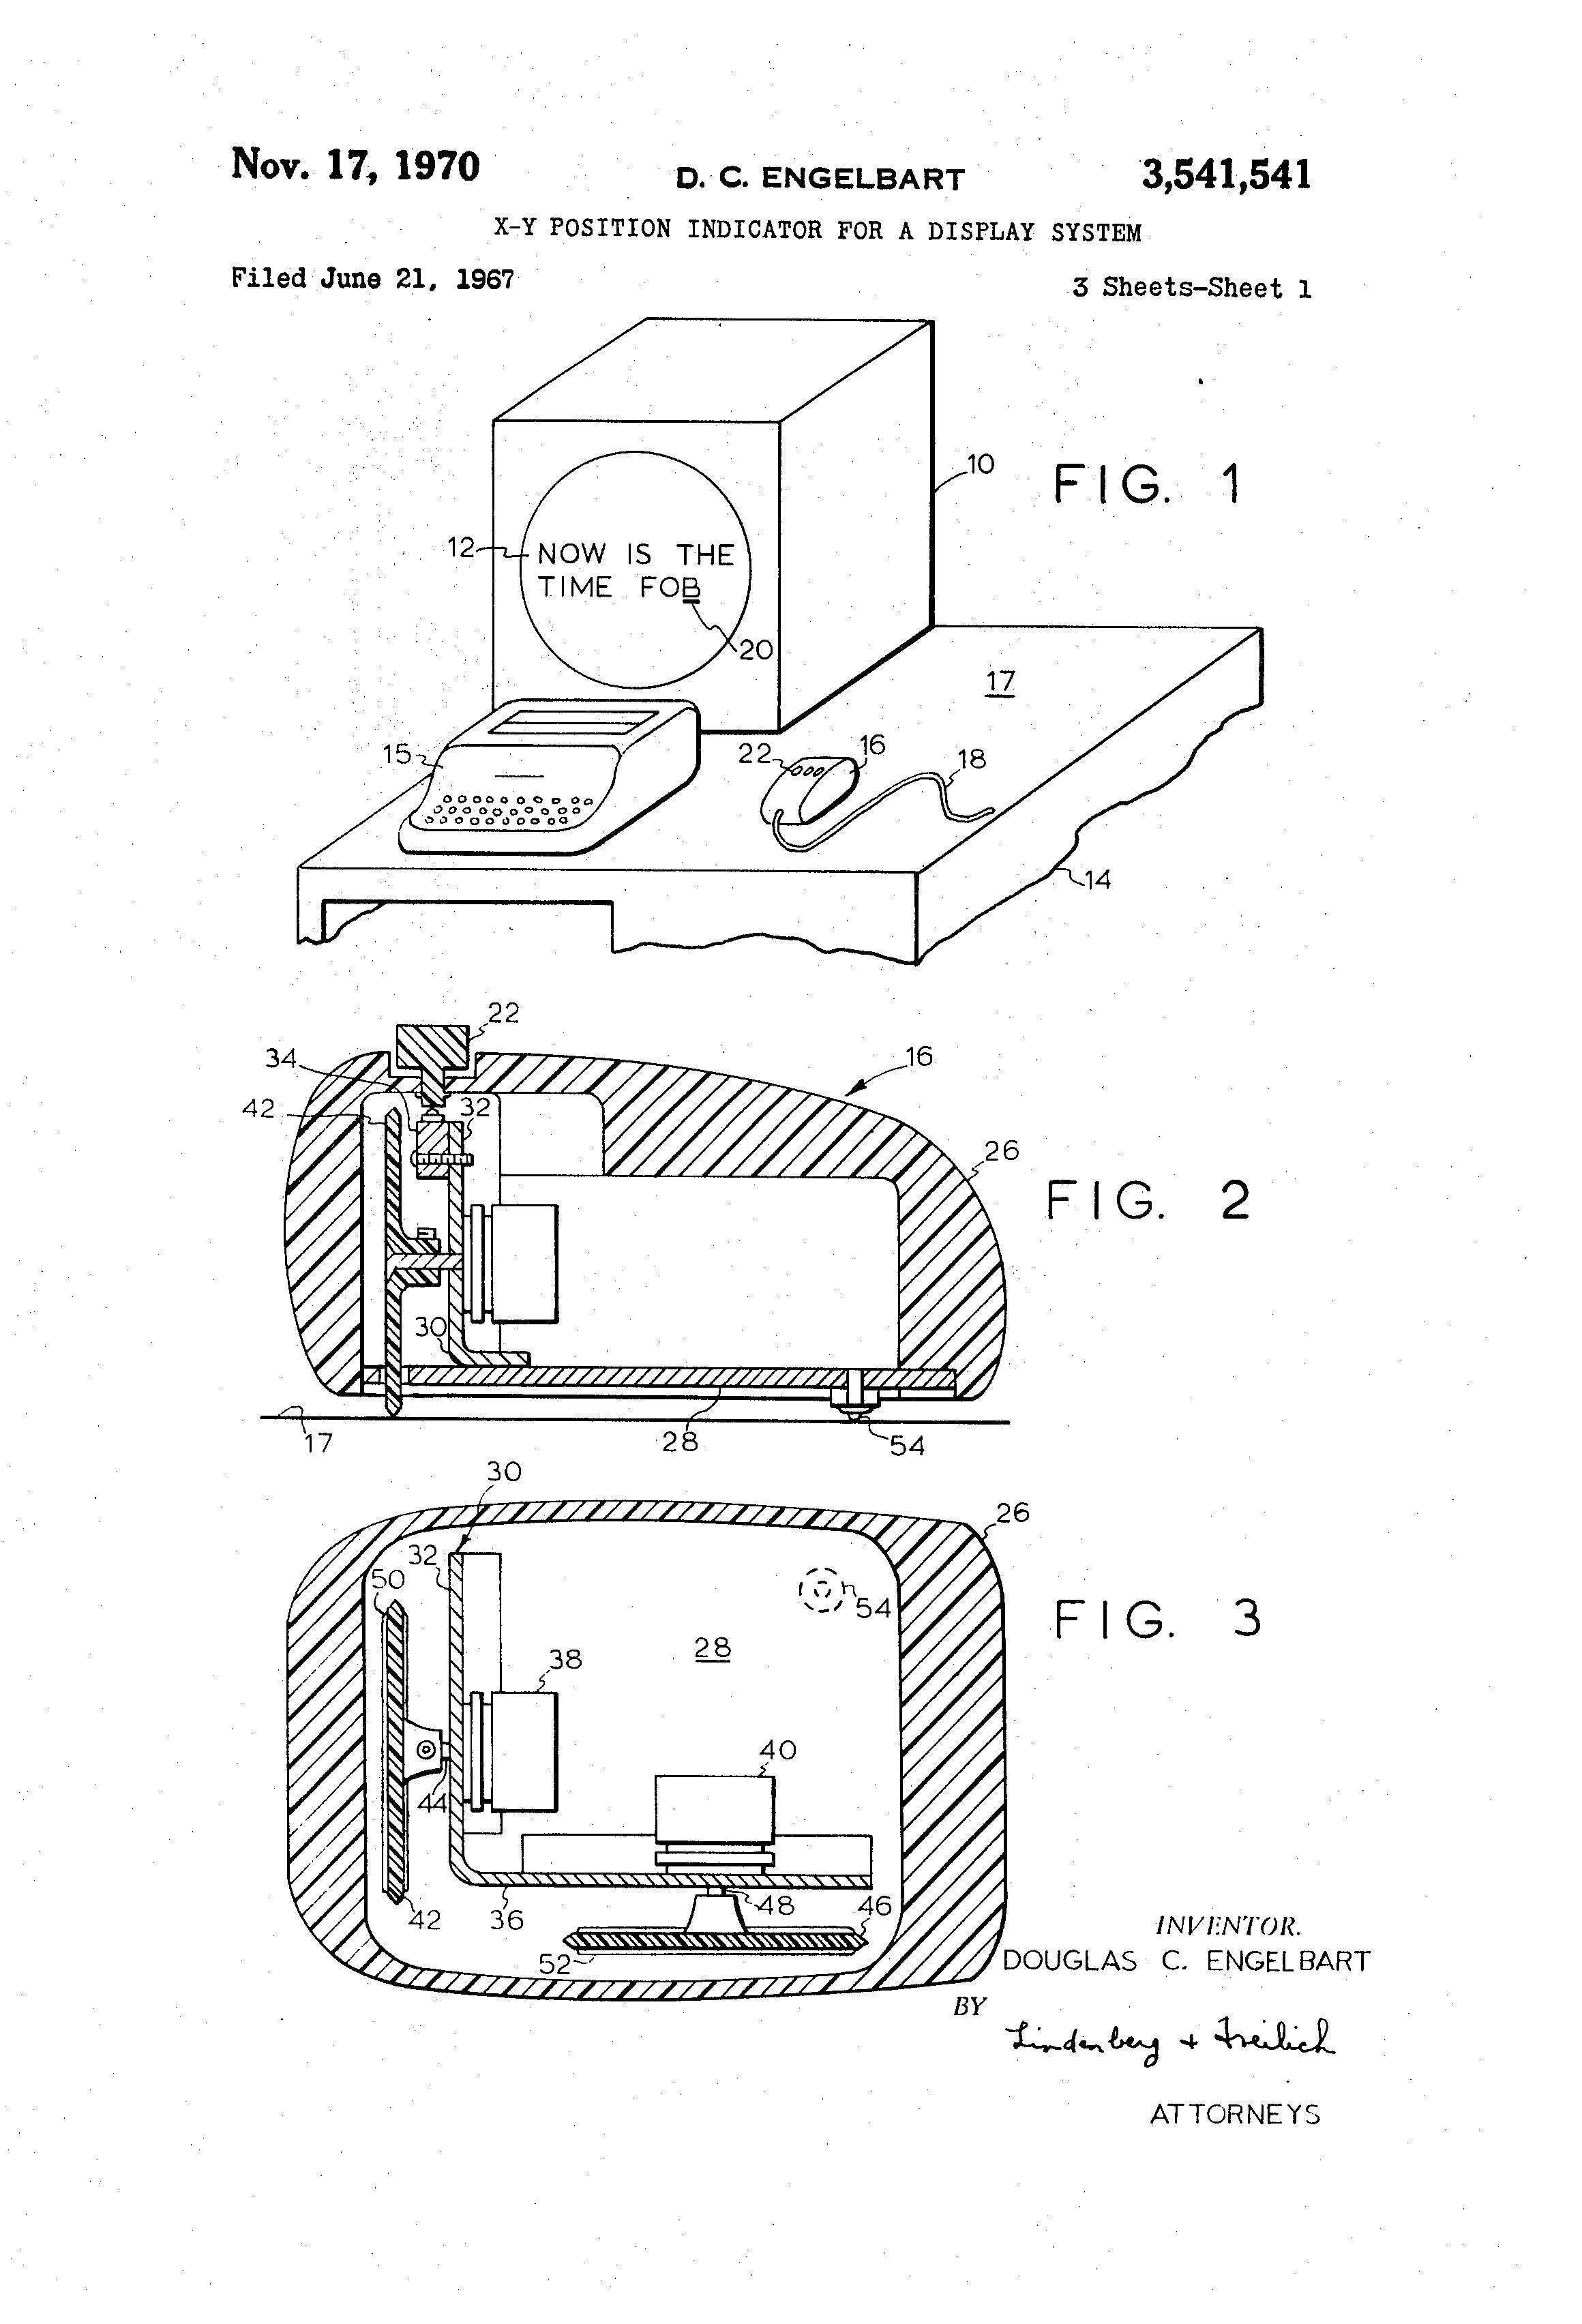 Fra Engelbarts patentsøknad.